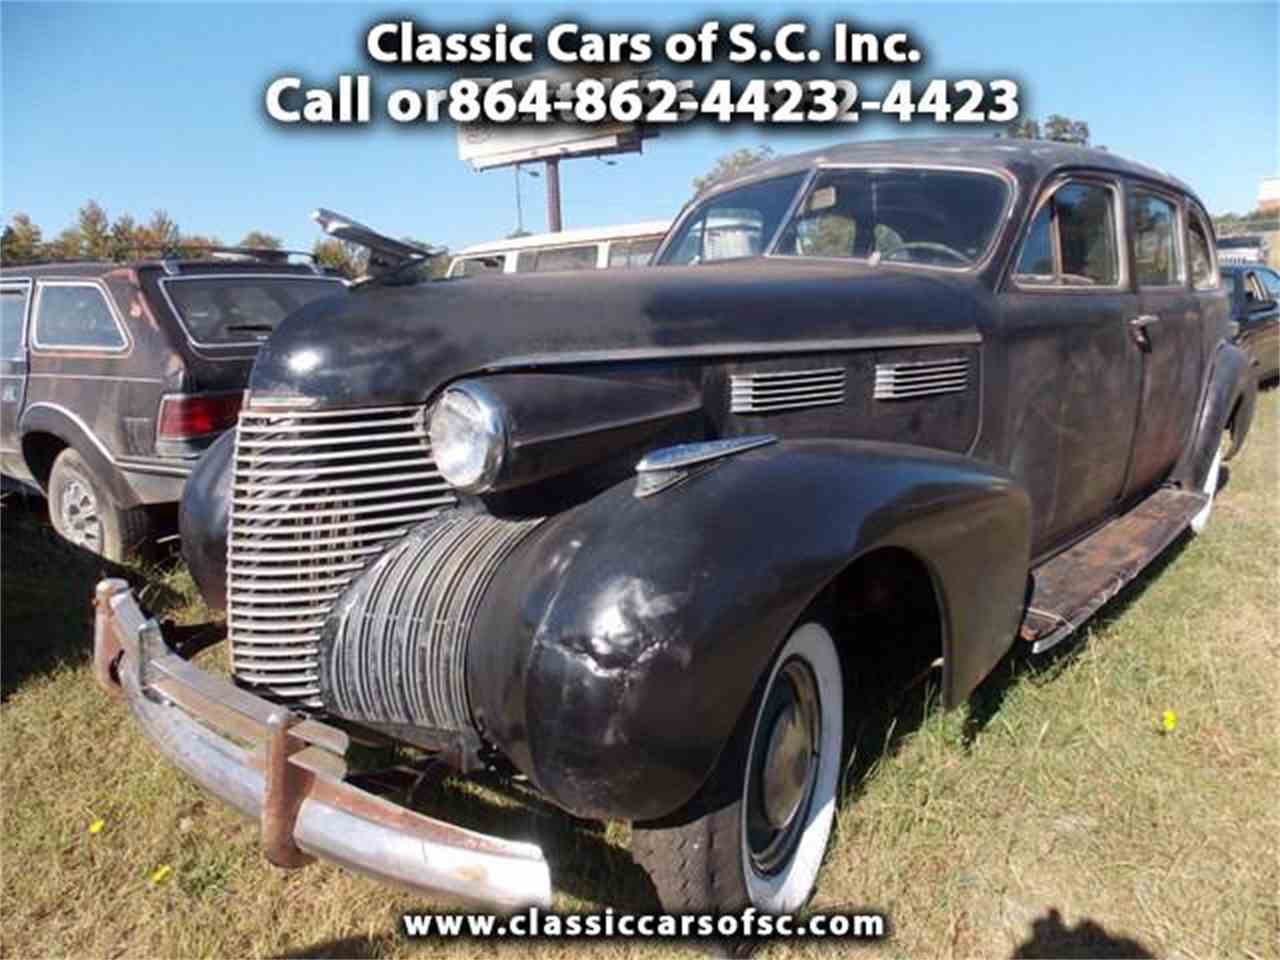 1940 Cadillac Limousine For Sale Classiccars Cc 913605 focus for Classic Cars South Carolina